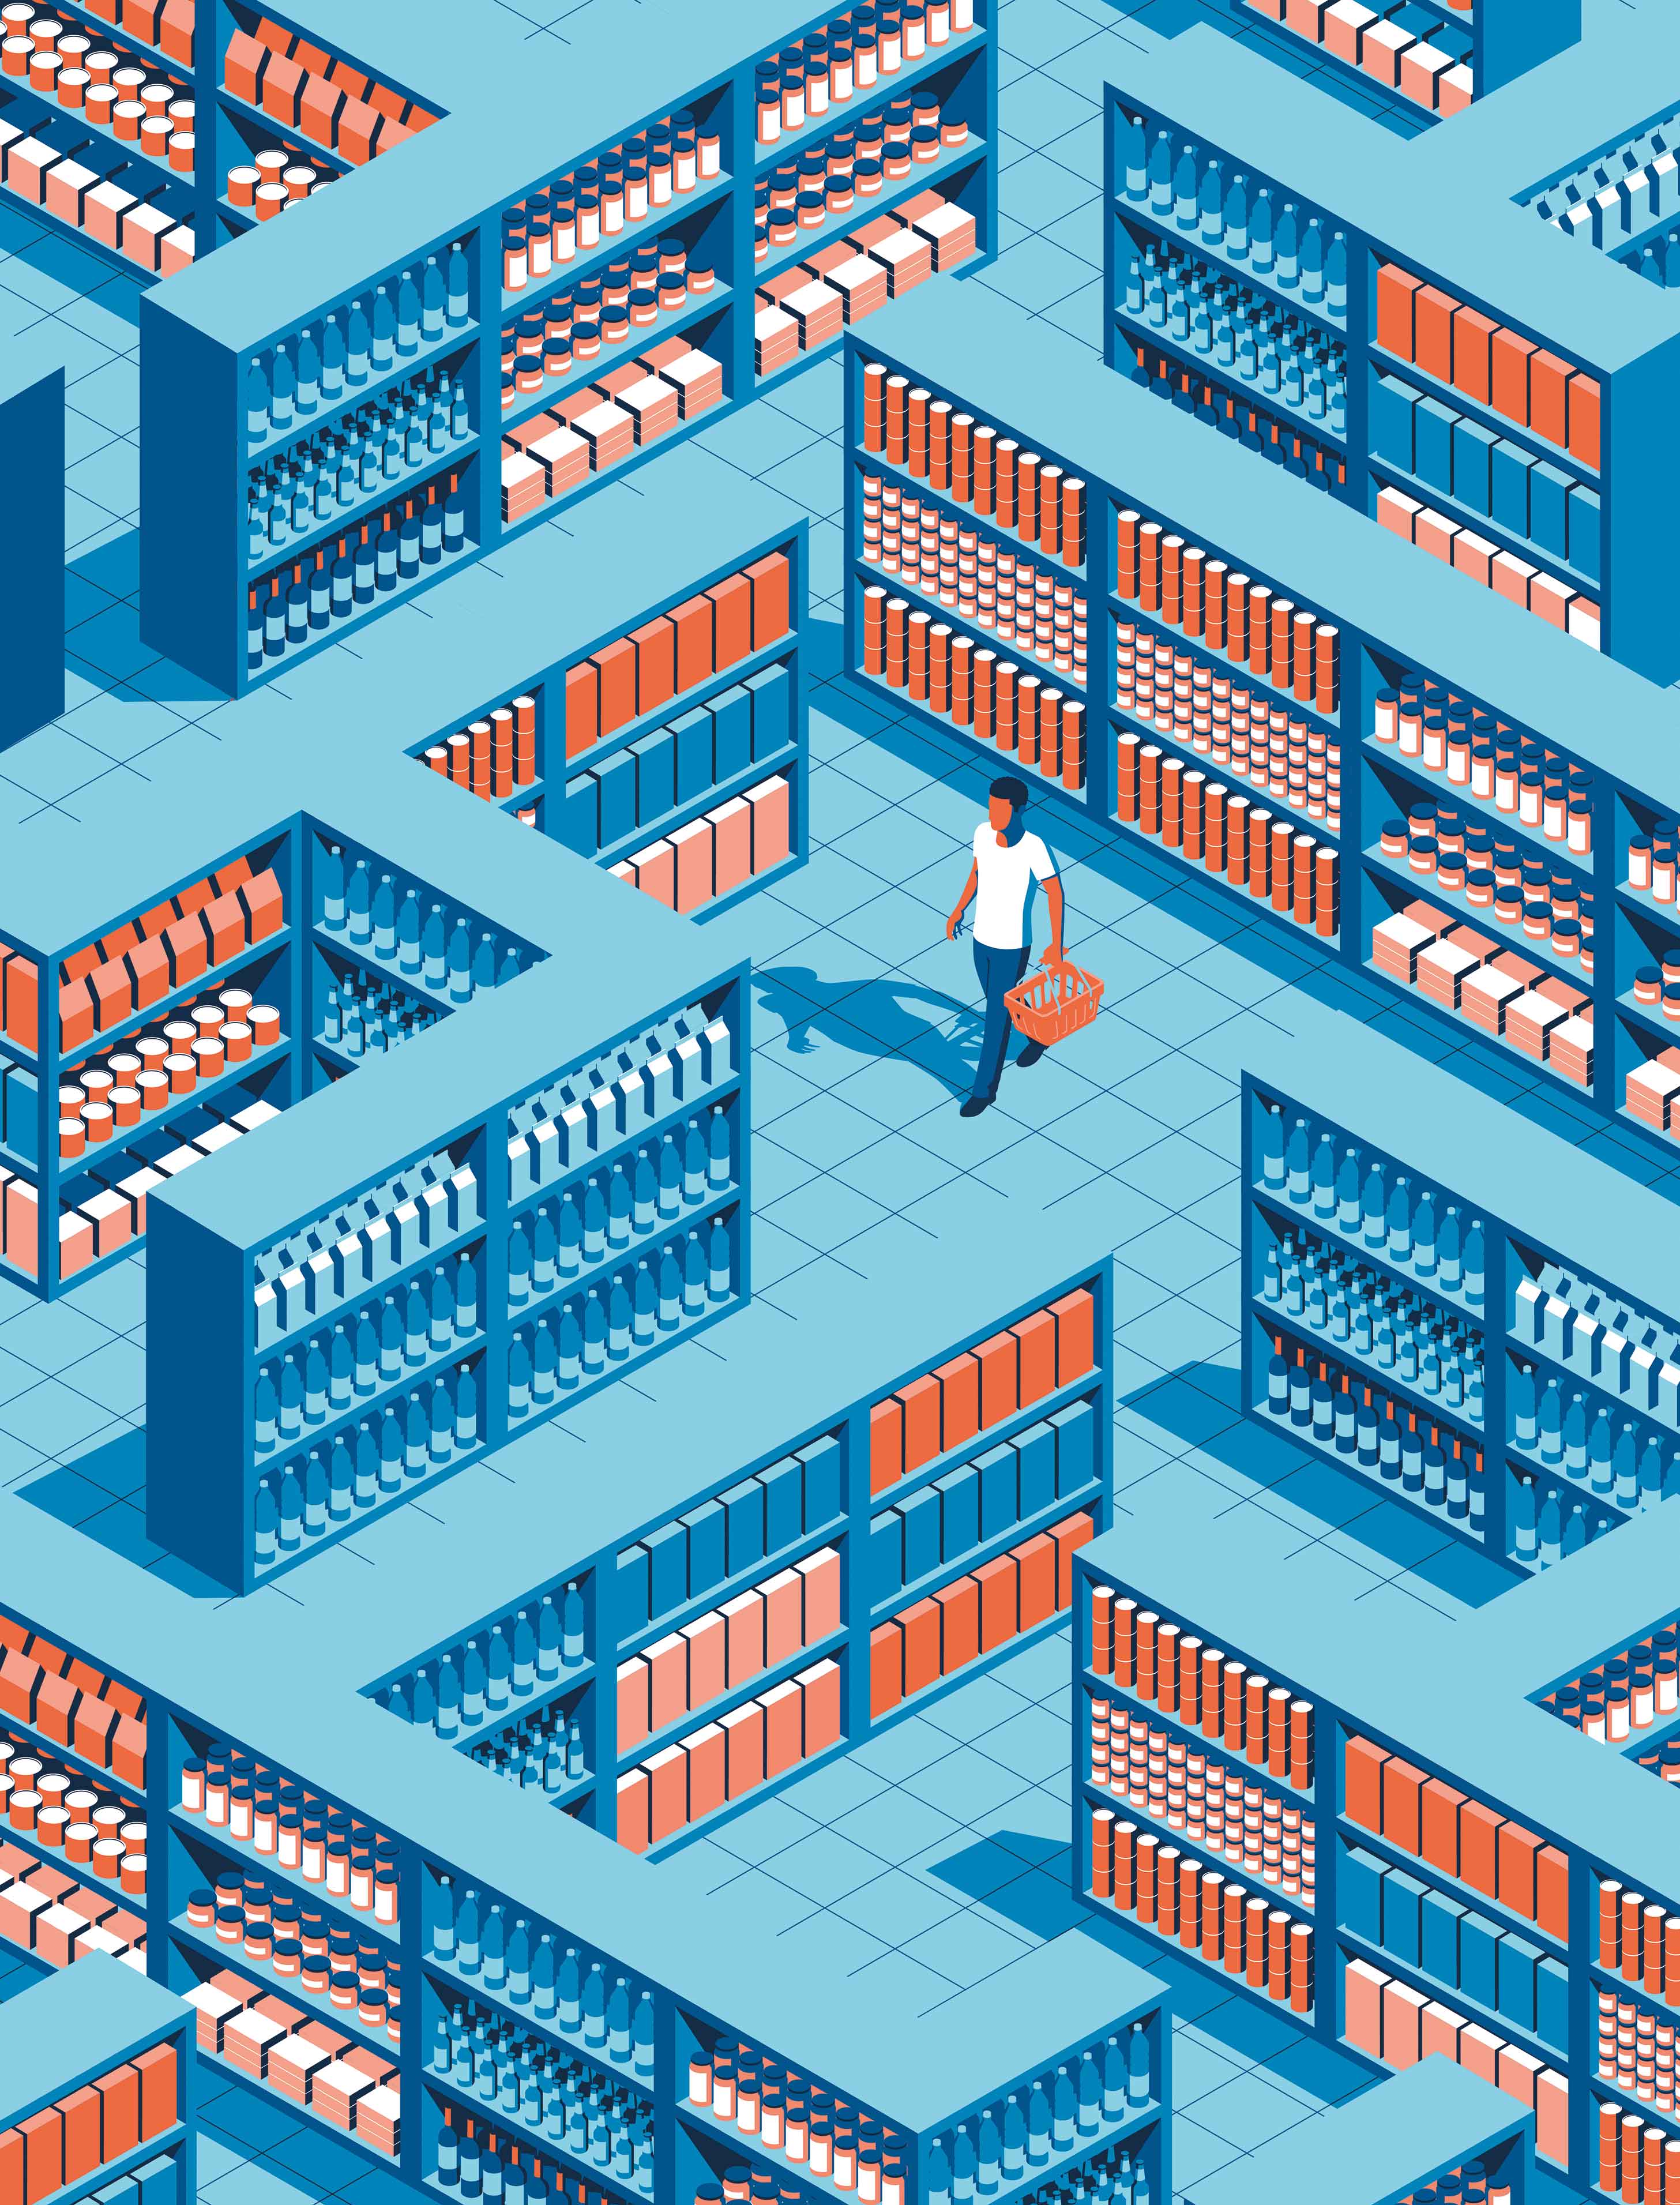 Shopper navigating a maze of store shelves